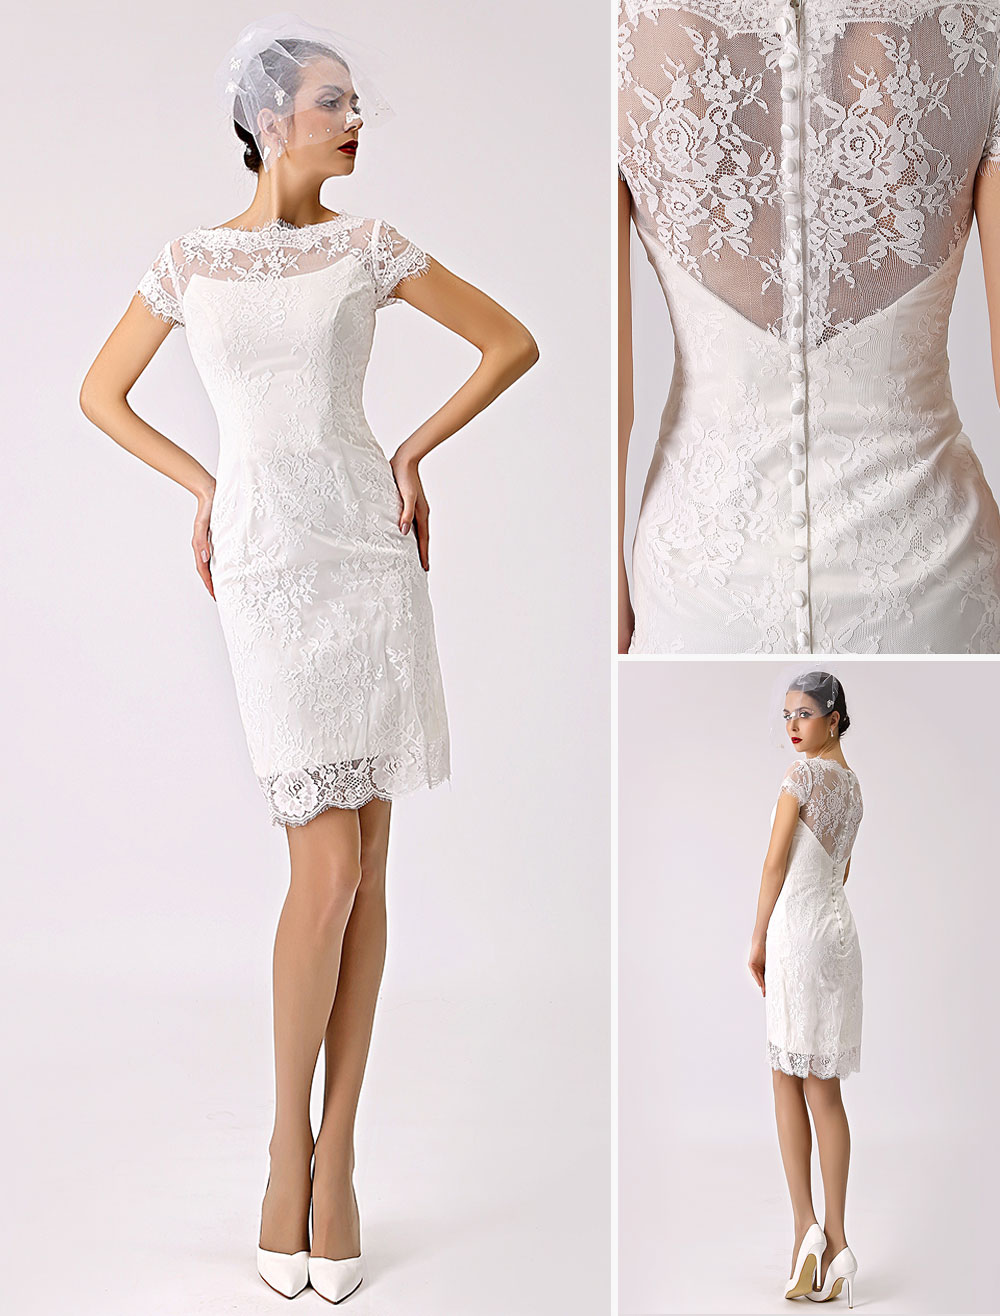 short wedding dresses 2018 lace Illusion Short Sleeve sheath column Reception Dress for Bride Milanoo (Cheap Wedding Dress) photo